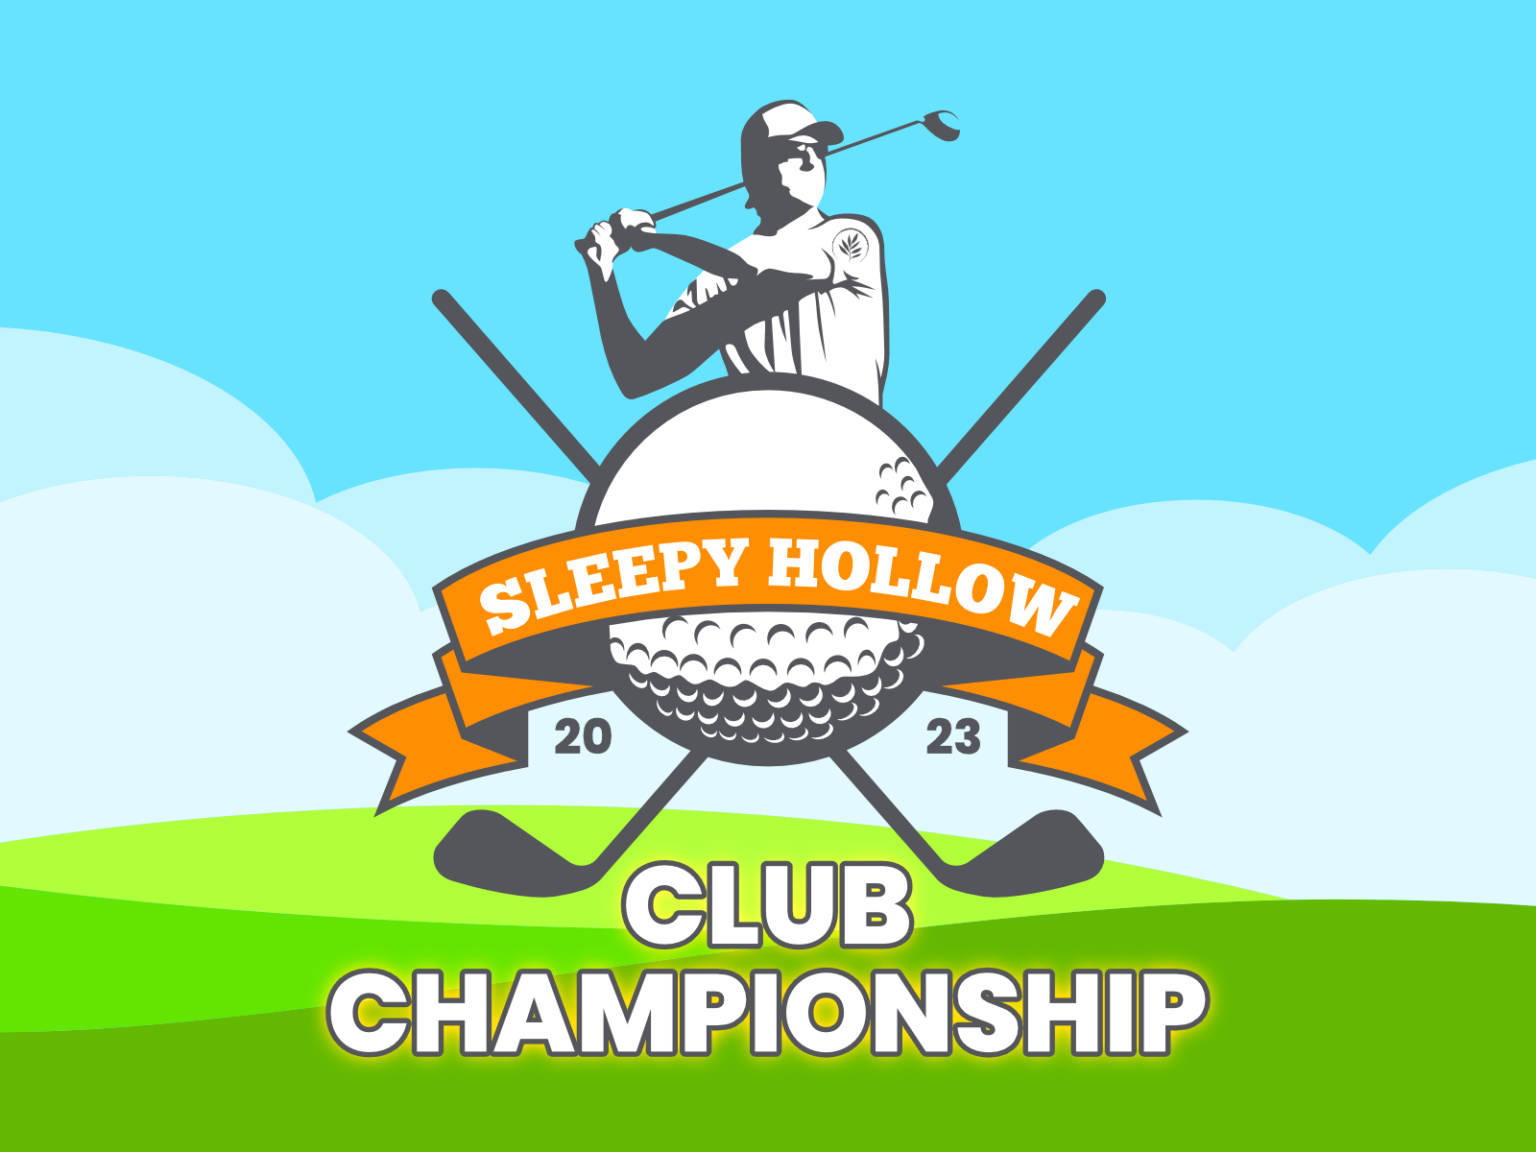 Club Championship Sleepy Hollow